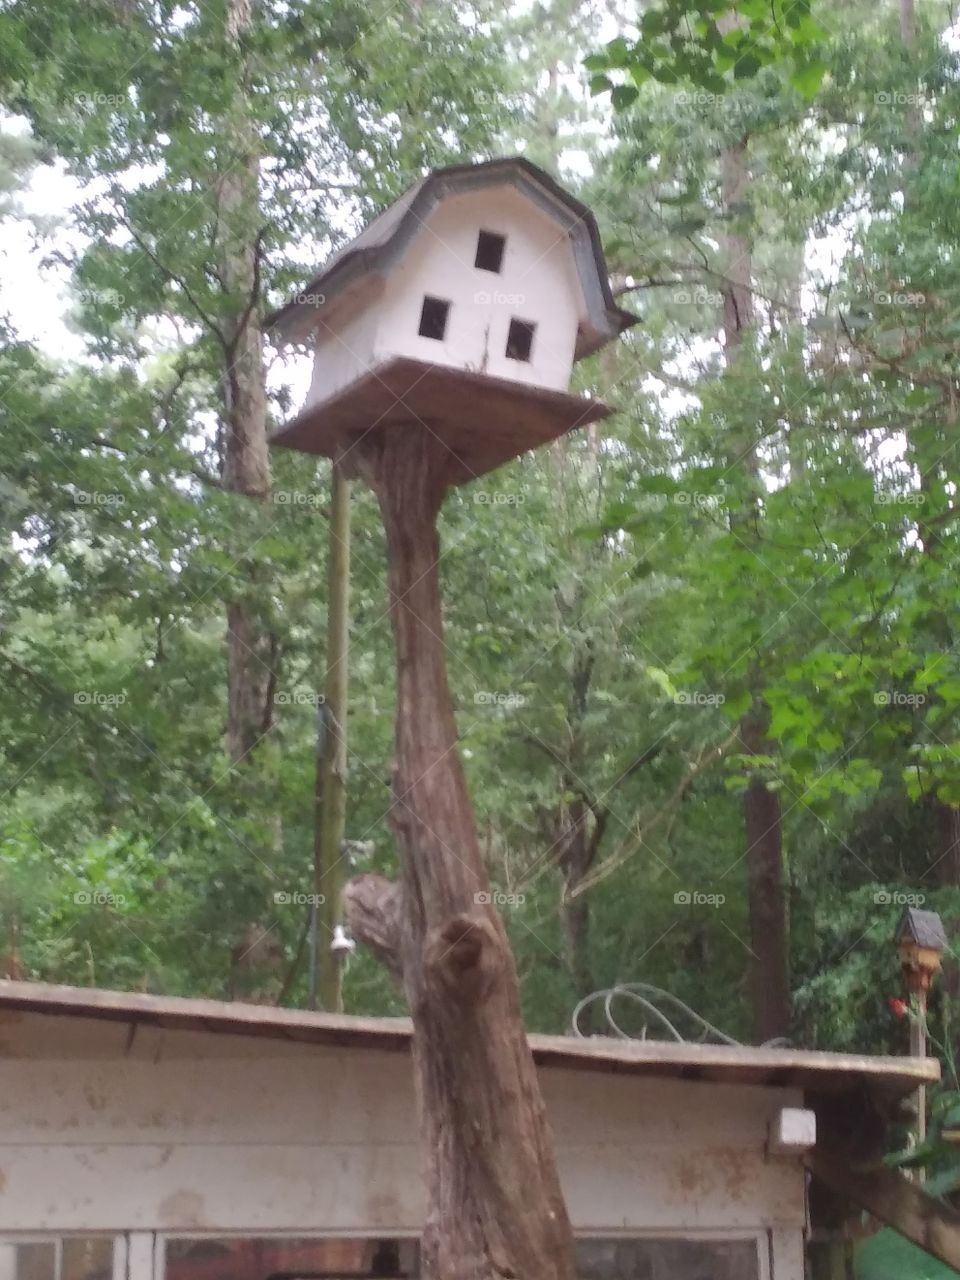 crazy Bird house